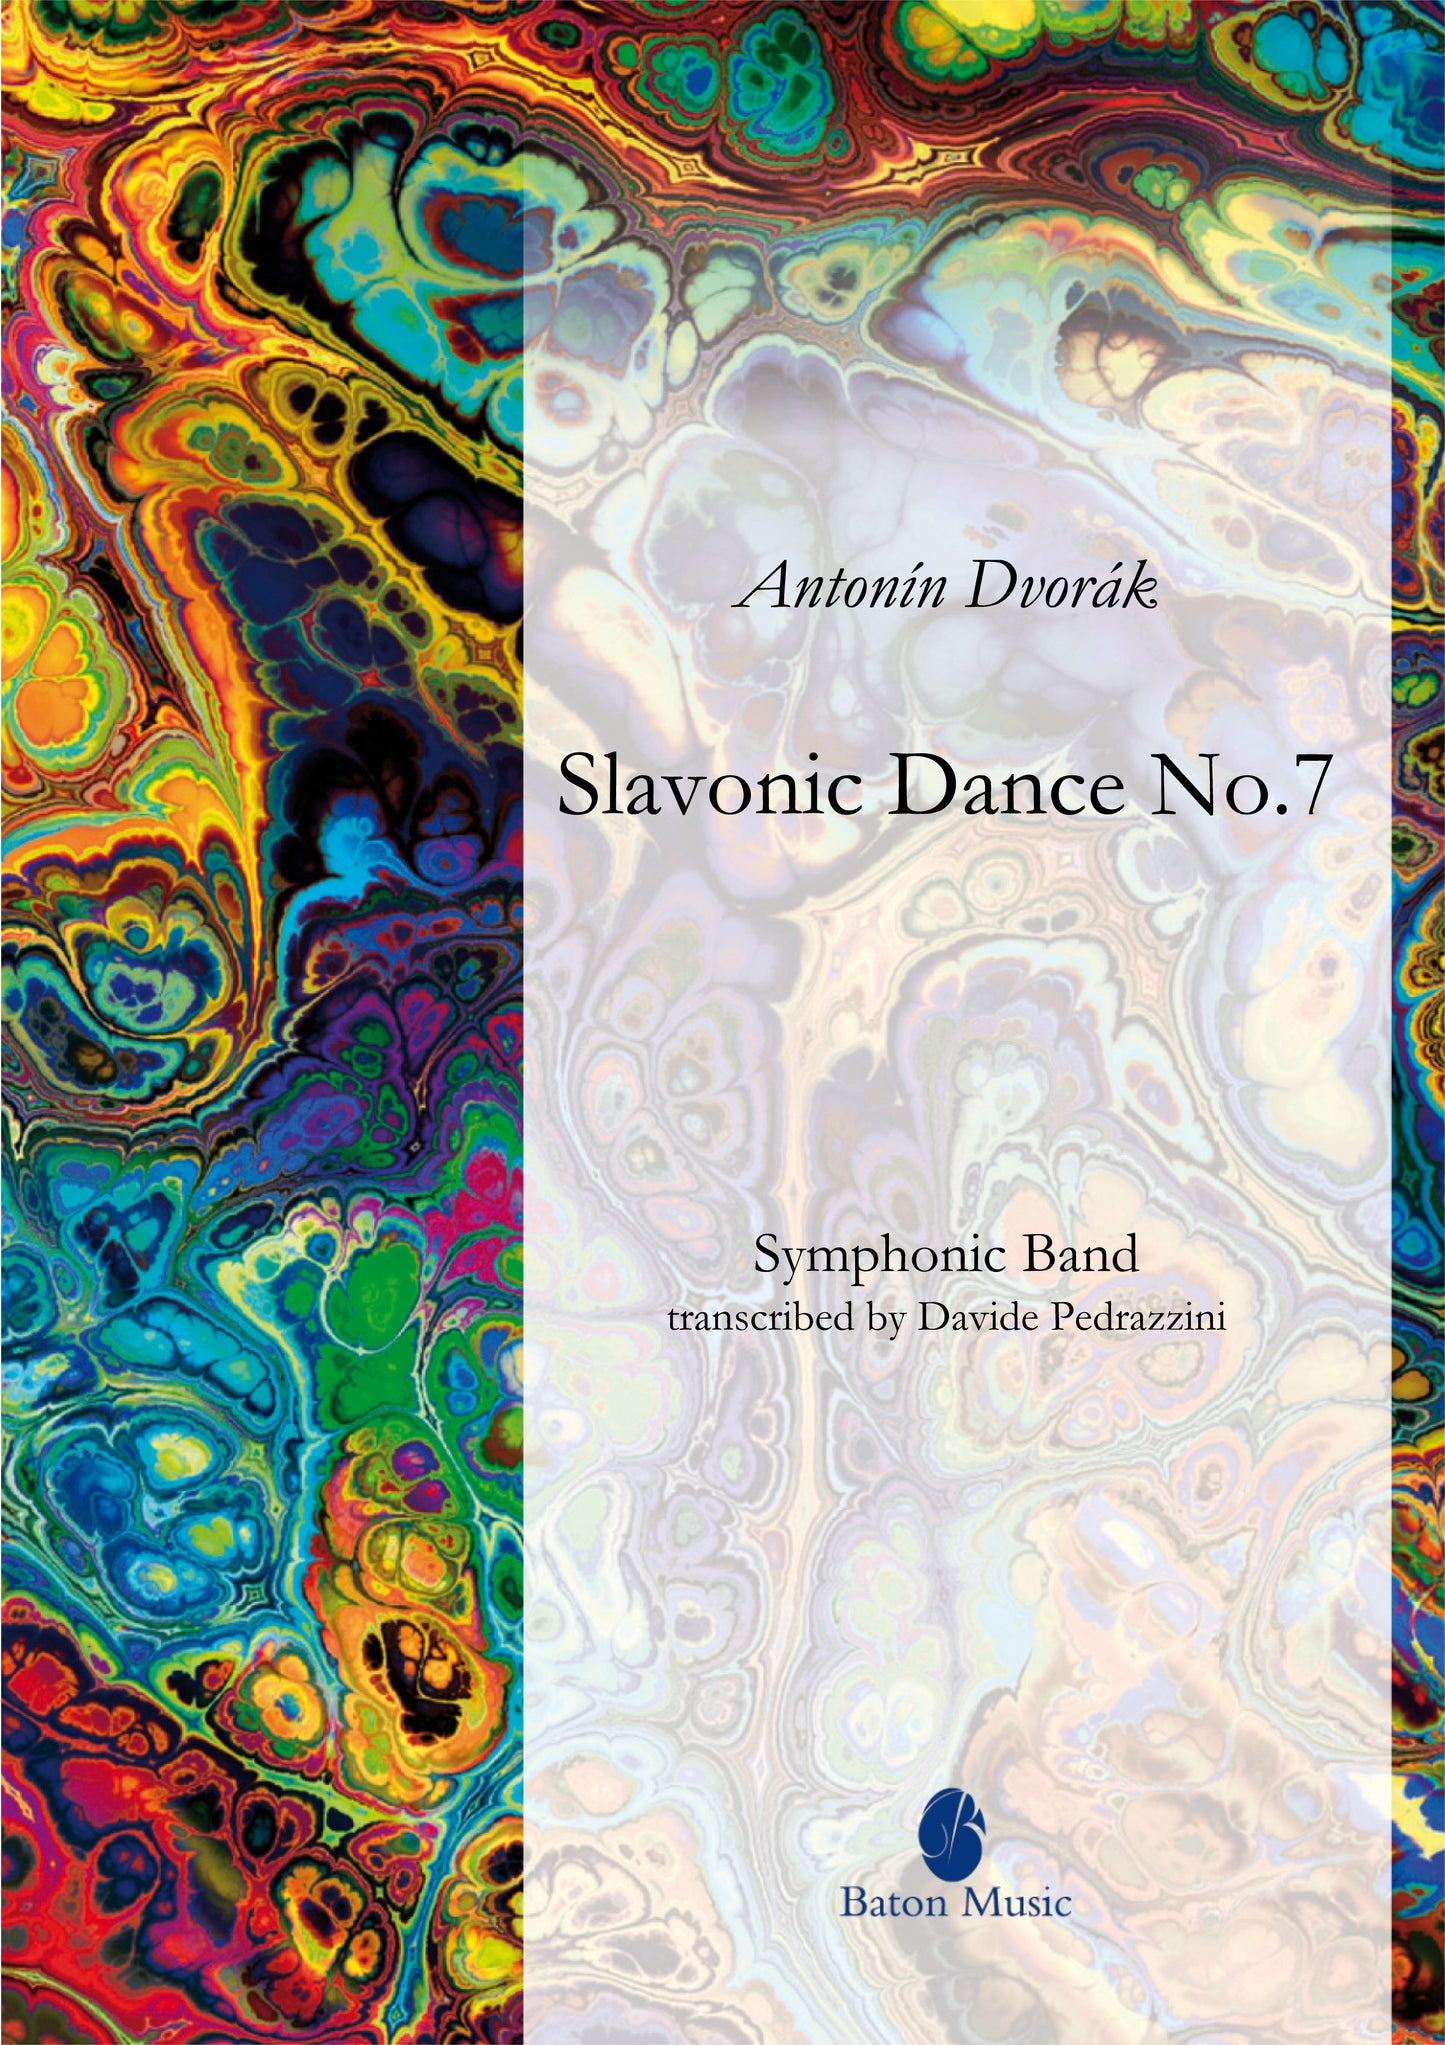 Slavonic Dance No. 7 - Antonin Dvorak